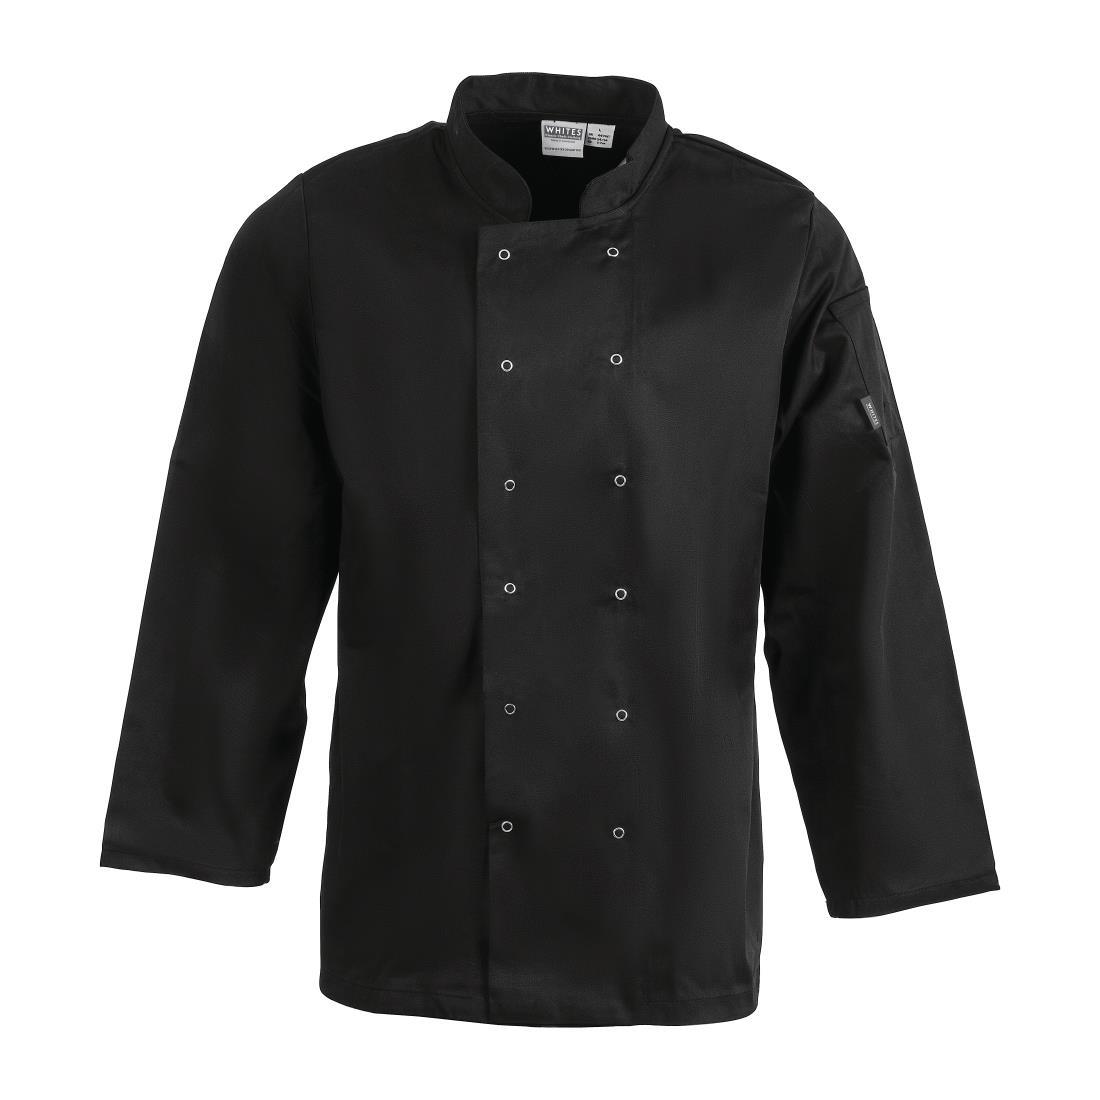 Whites Vegas Unisex Chefs Jacket Long Sleeve Black S - A438-S  - 1